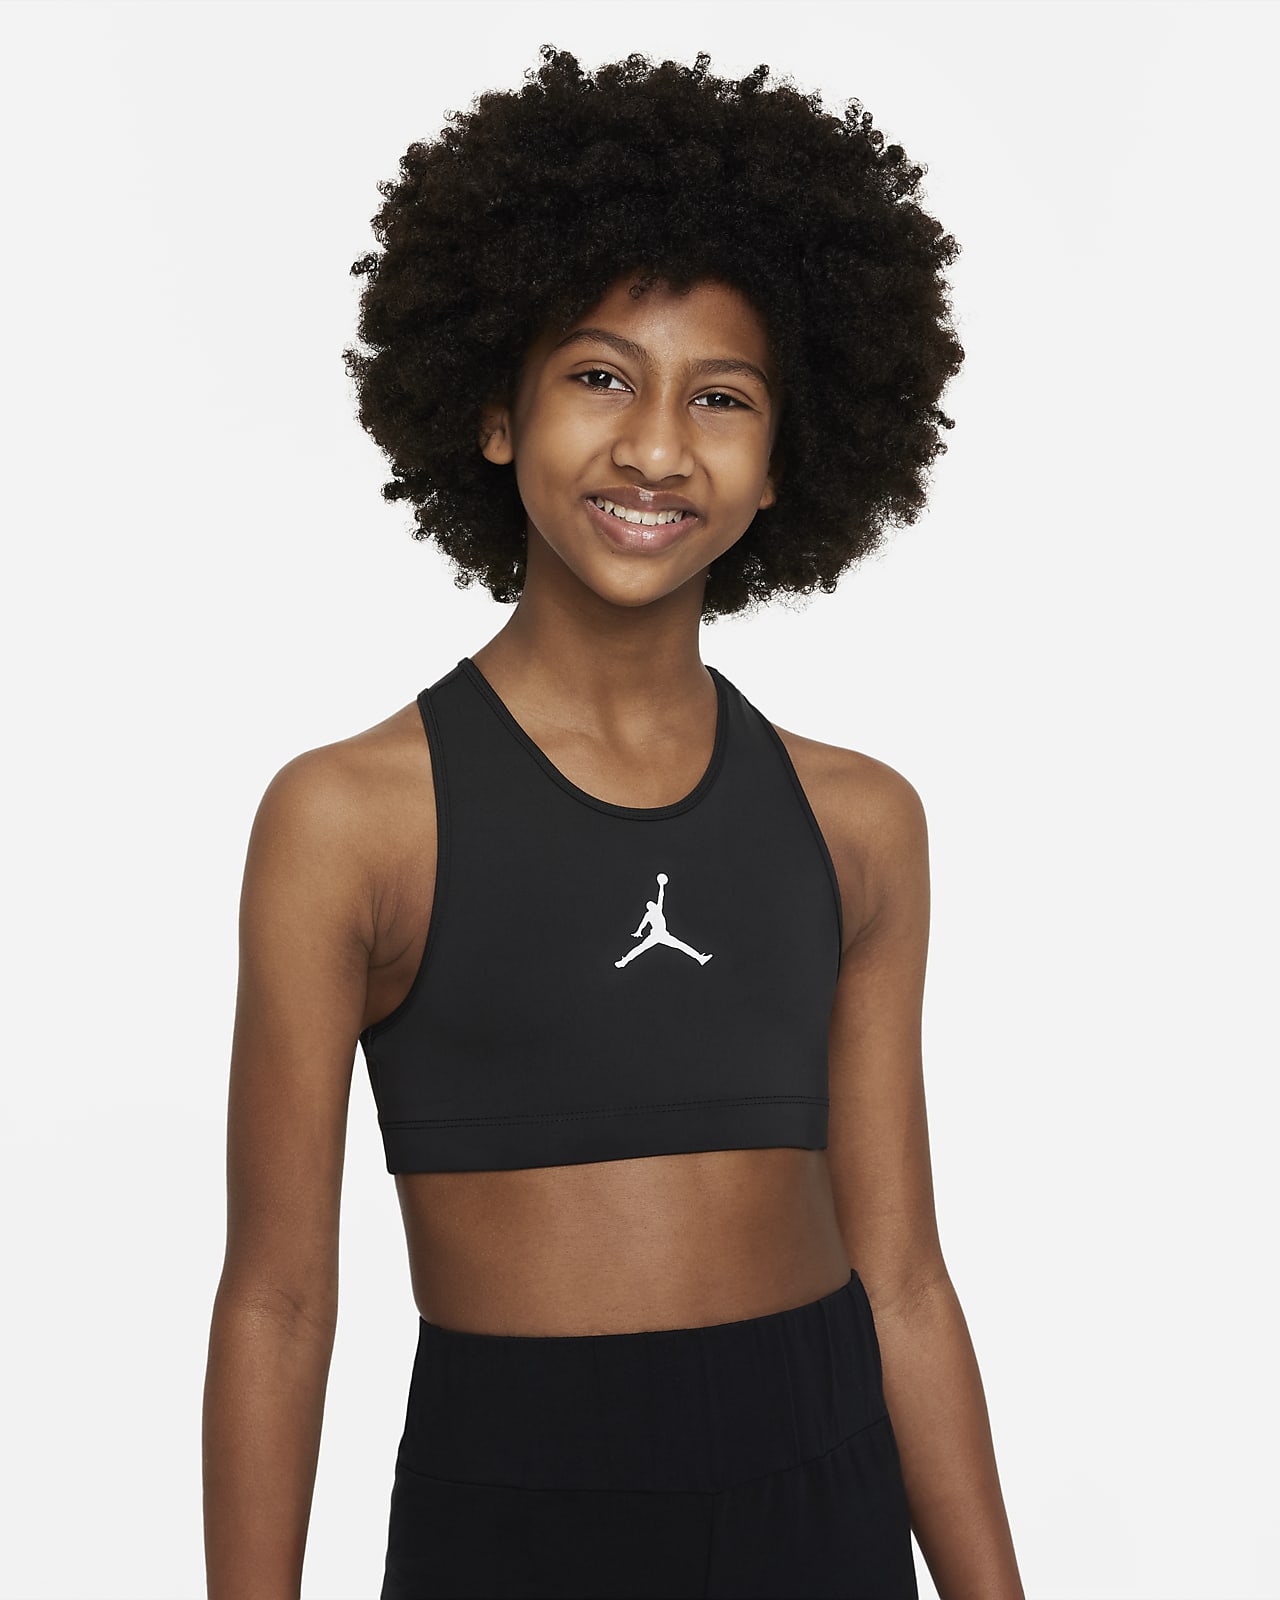 Nike Sports Bras. Find Nike Sports Bras for Women and Kids in